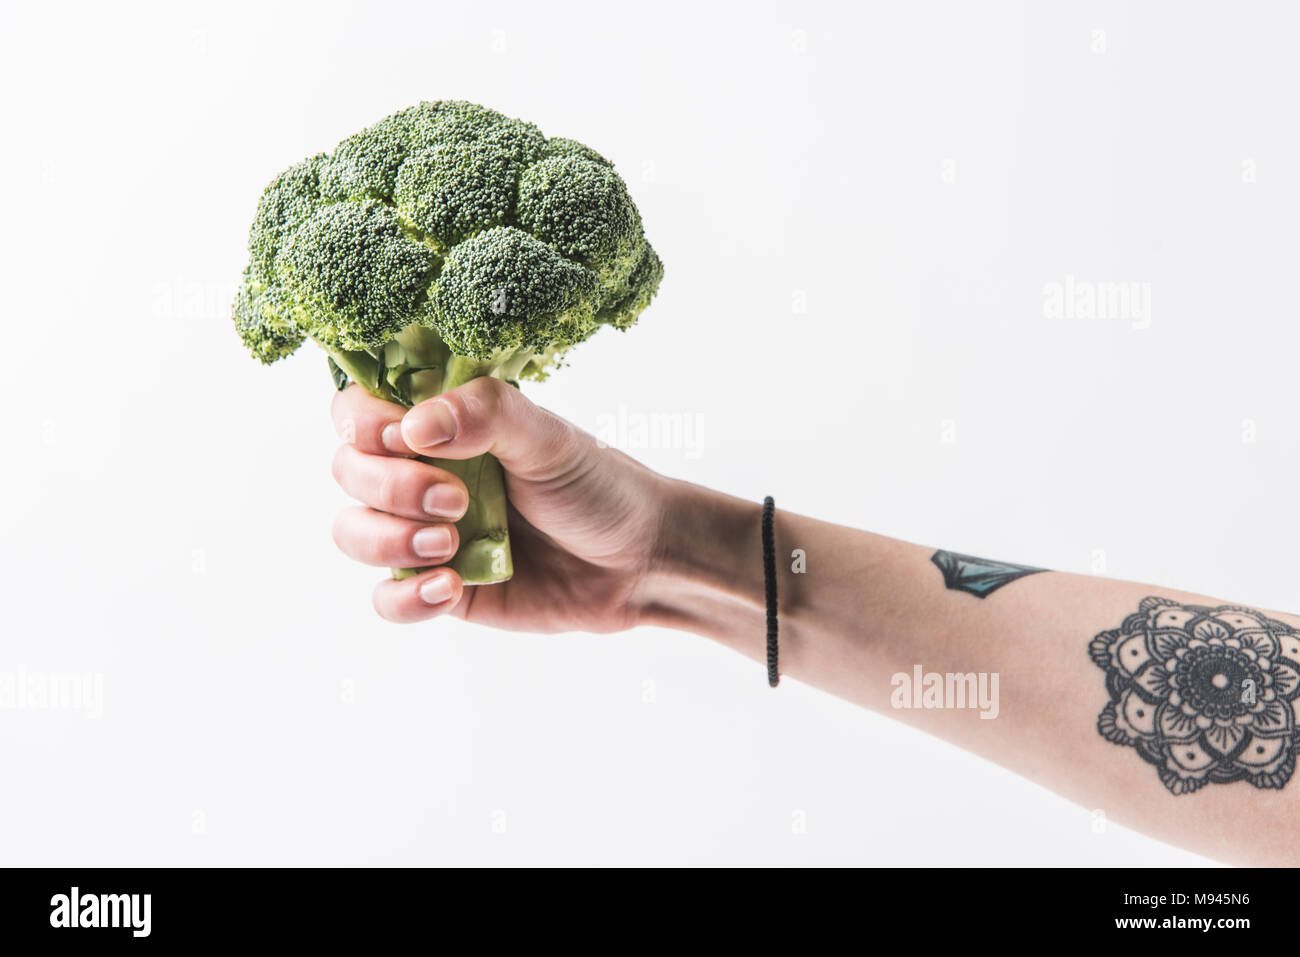 Hand holding raw broccoli cabbage florets isolated on white background Stock Photo